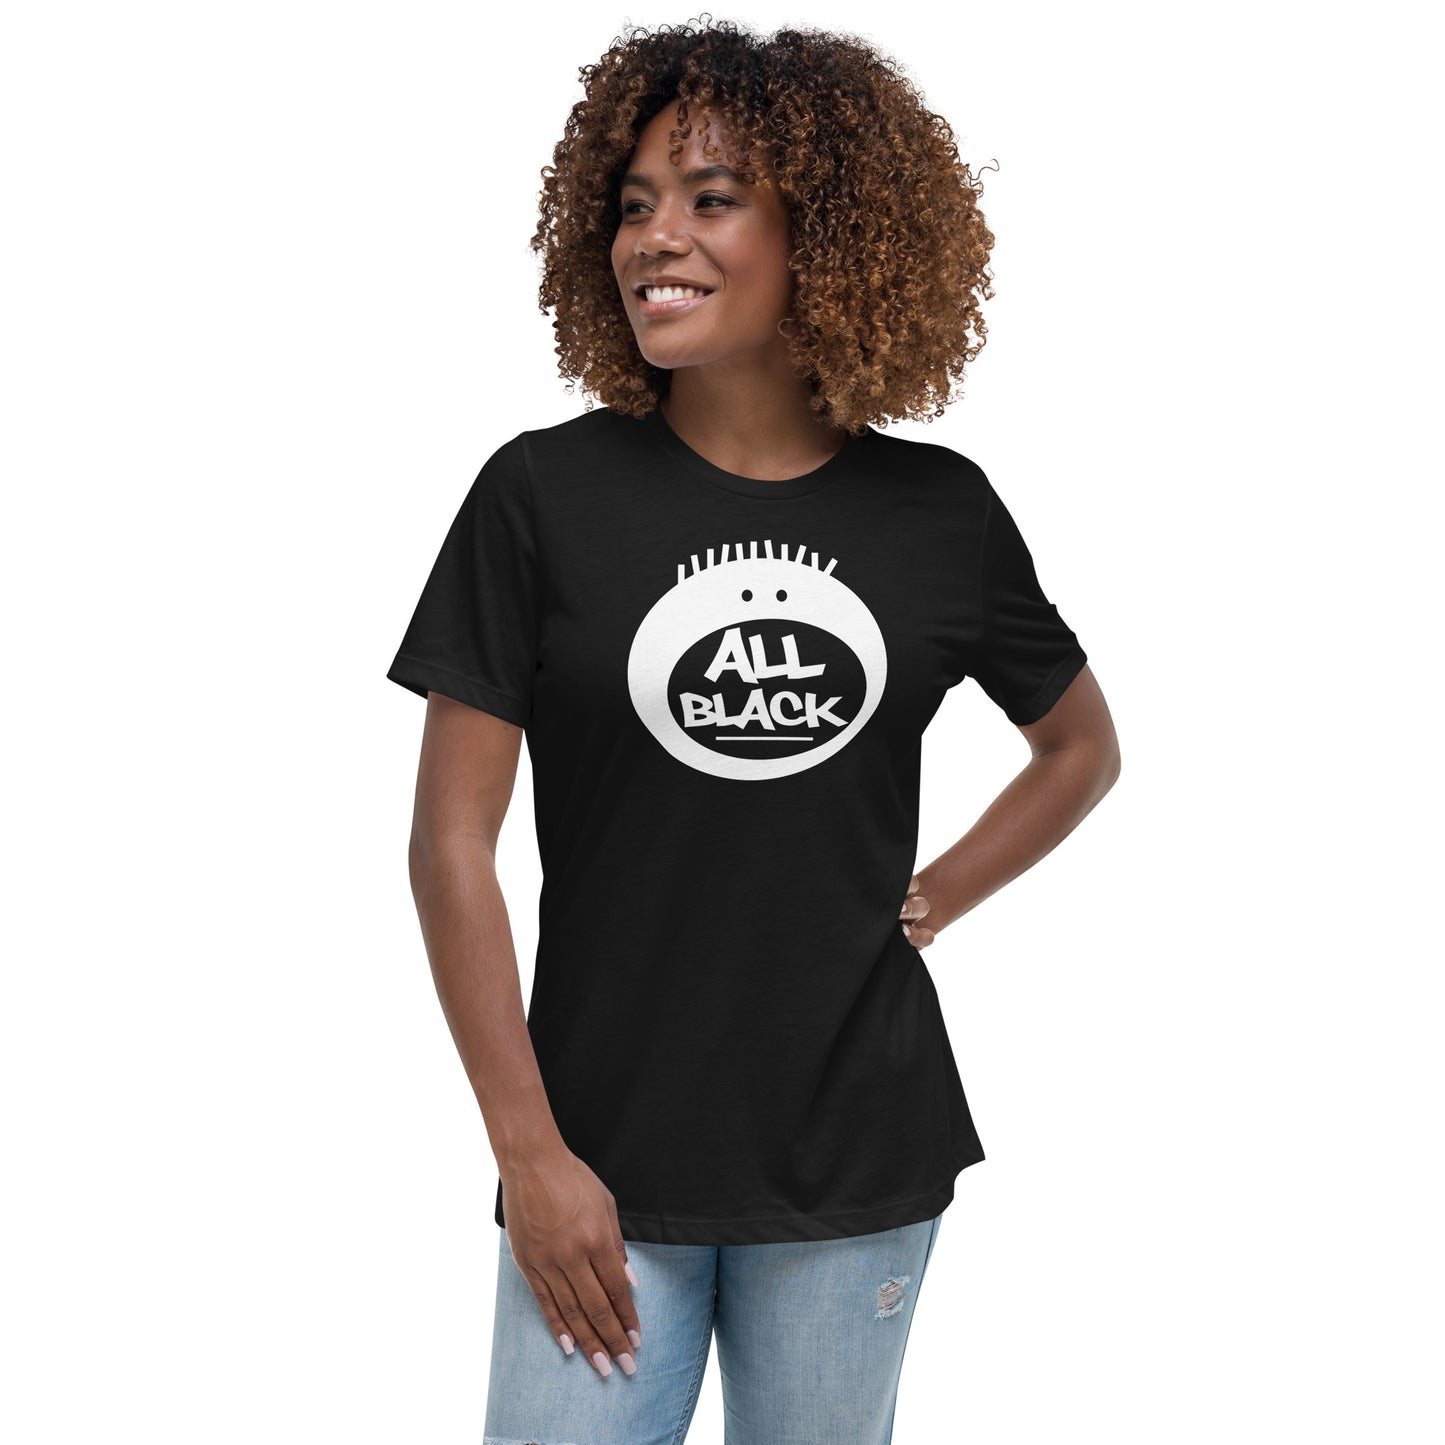 All Black Short Sleeve Women's T-shirt